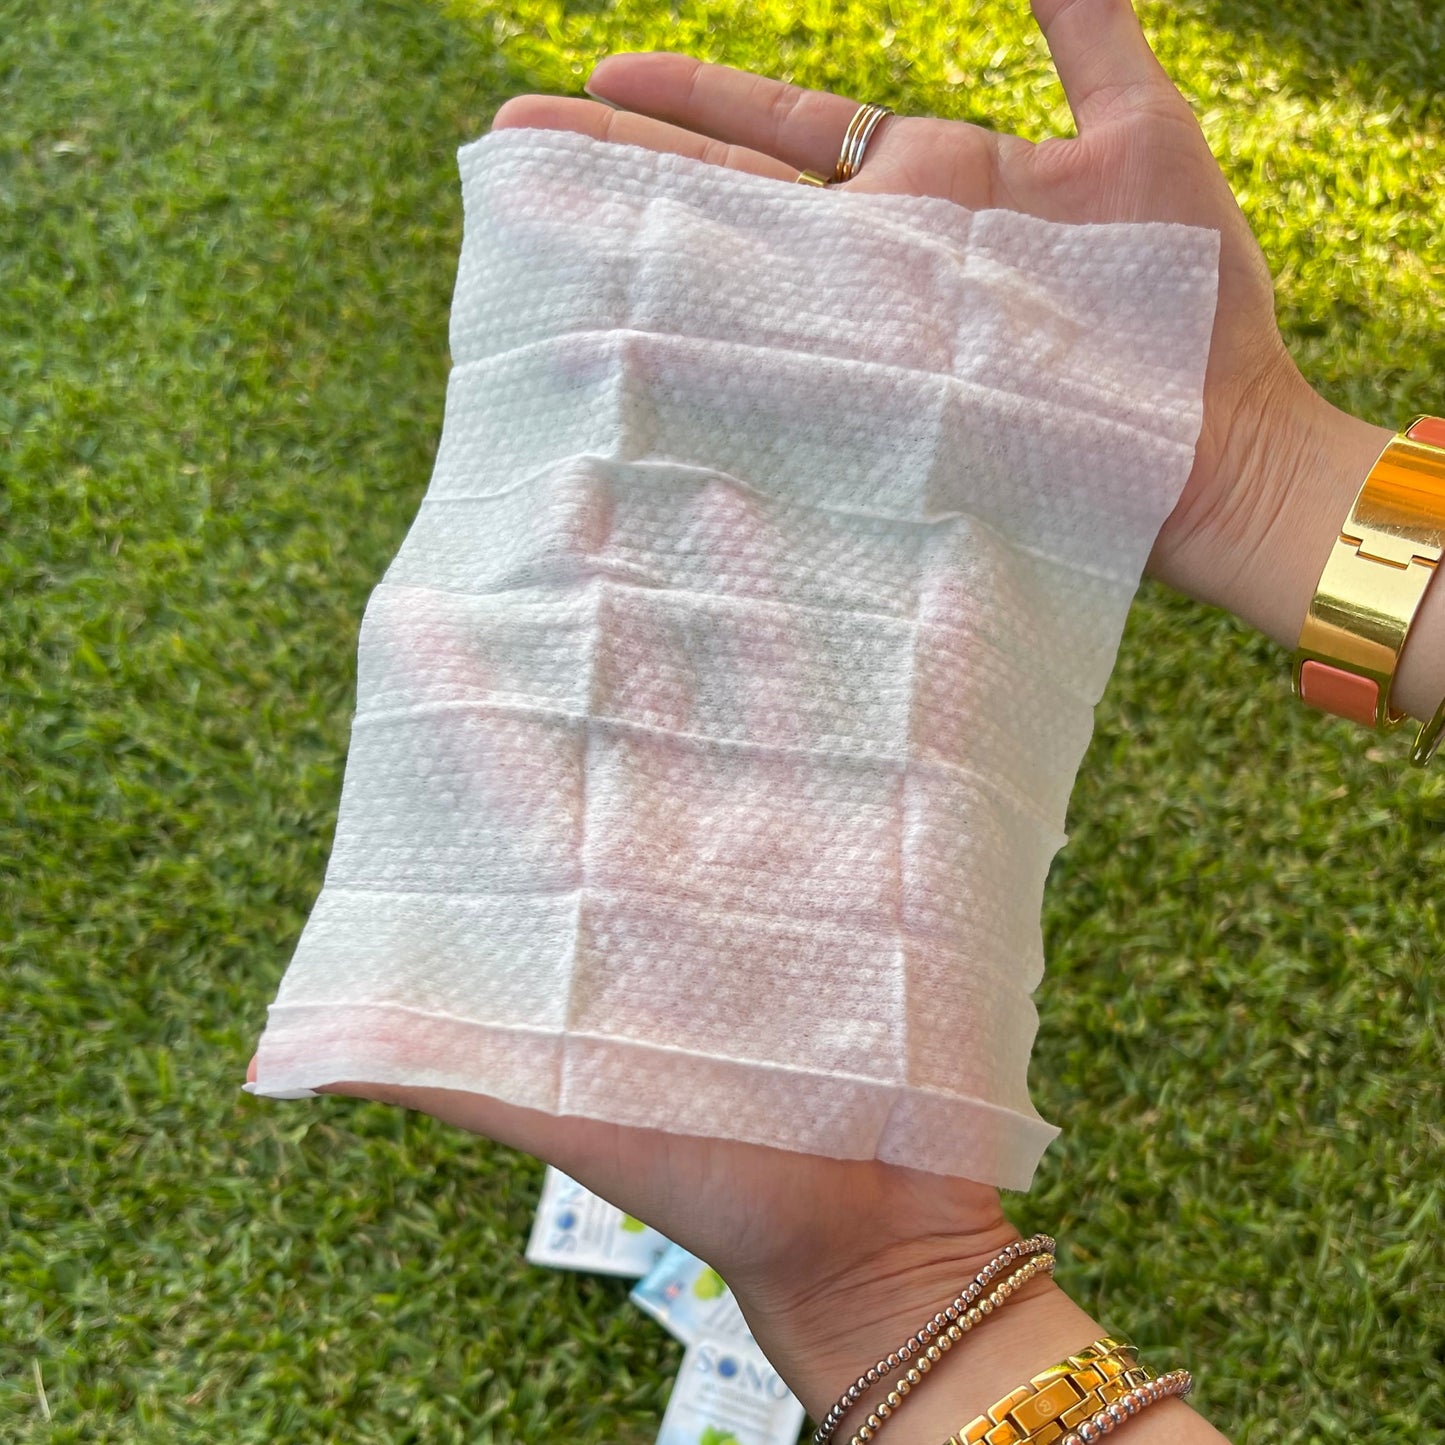 SONO Moisturizing Hand Sanitizer Wipes (25 Pack)